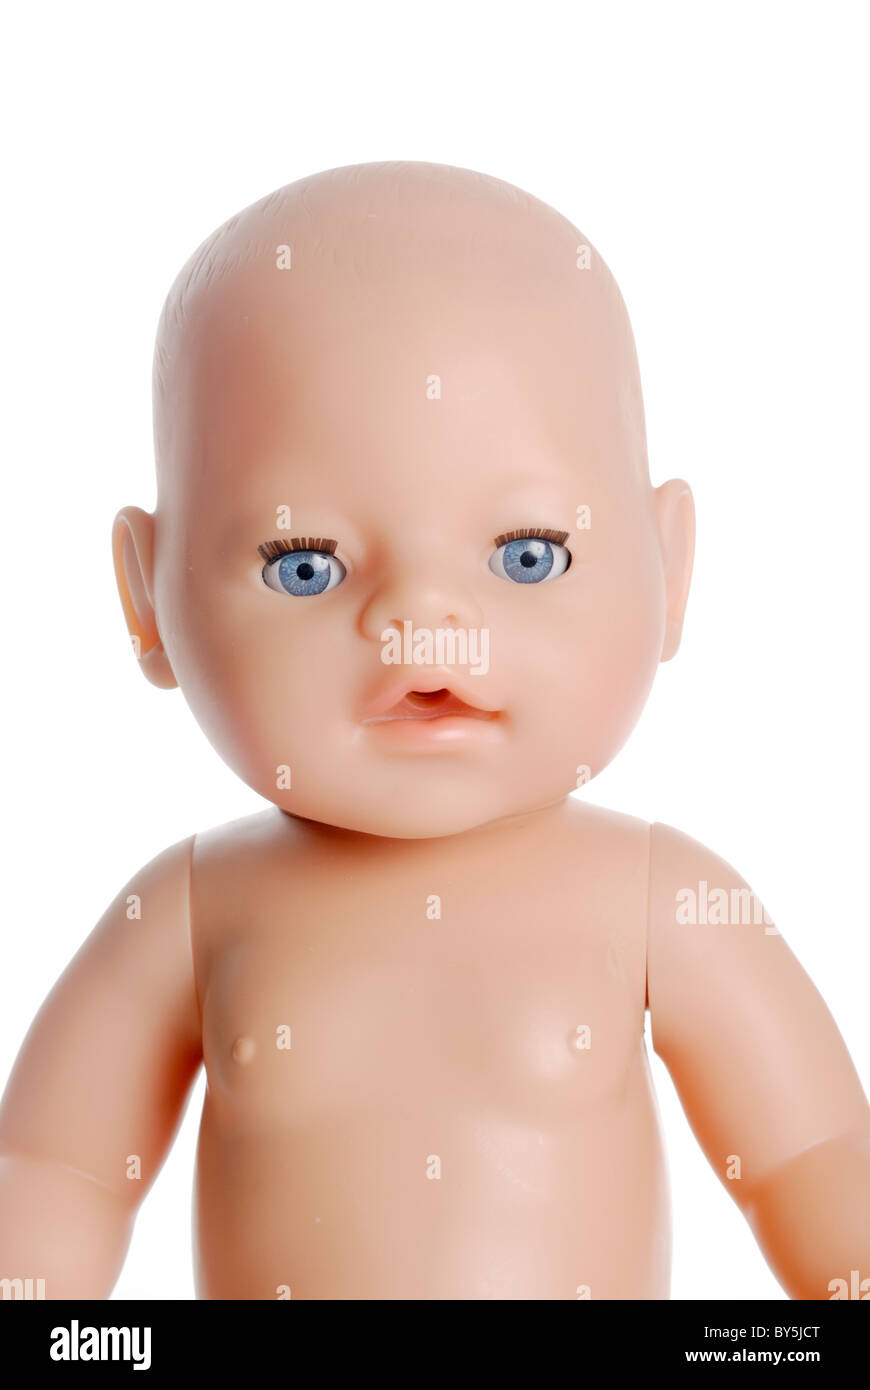 Plastic baby doll Stock Photo - Alamy